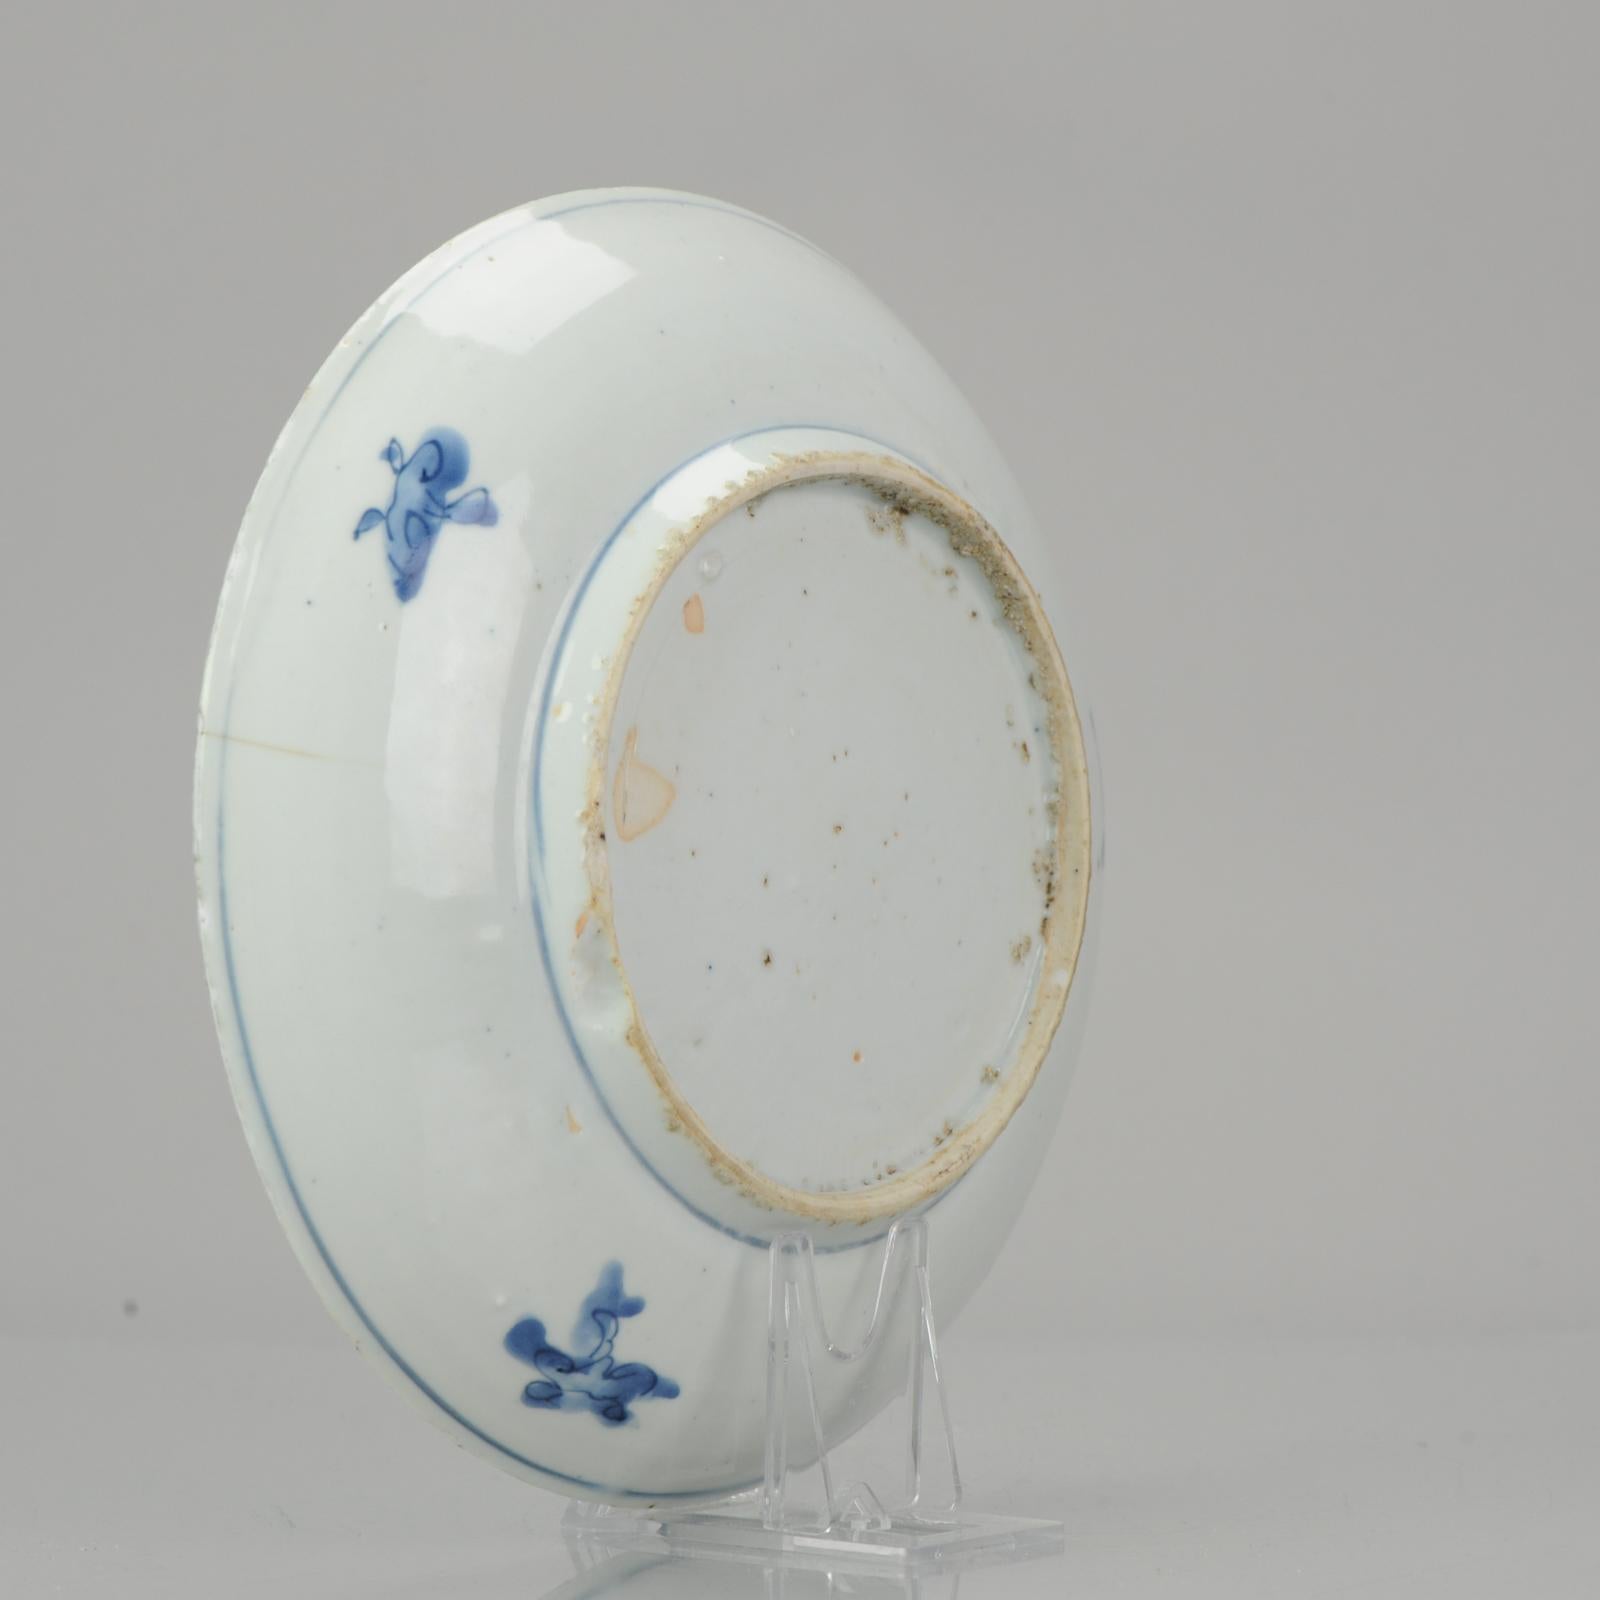 Antique Chinese Porcelain Lotus Ming 1600-1640 Tianqi Chongzhen Anhua Engraving For Sale 2